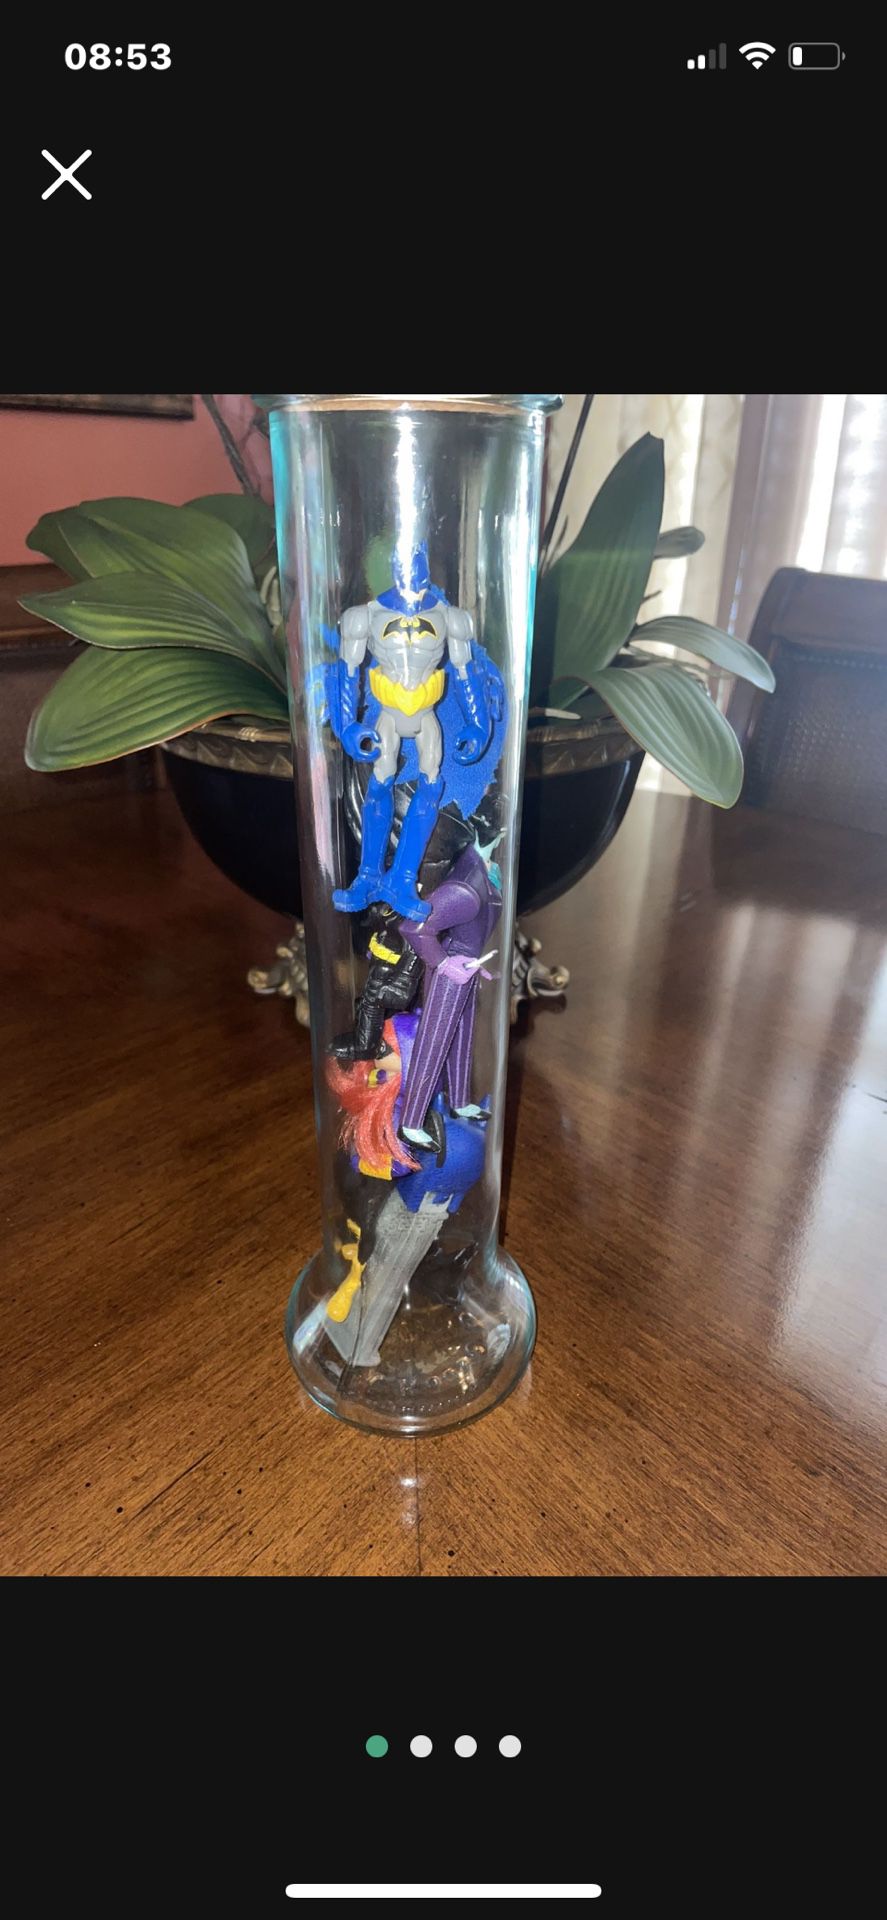 DC Comics Batman Glass Tower Collectibles